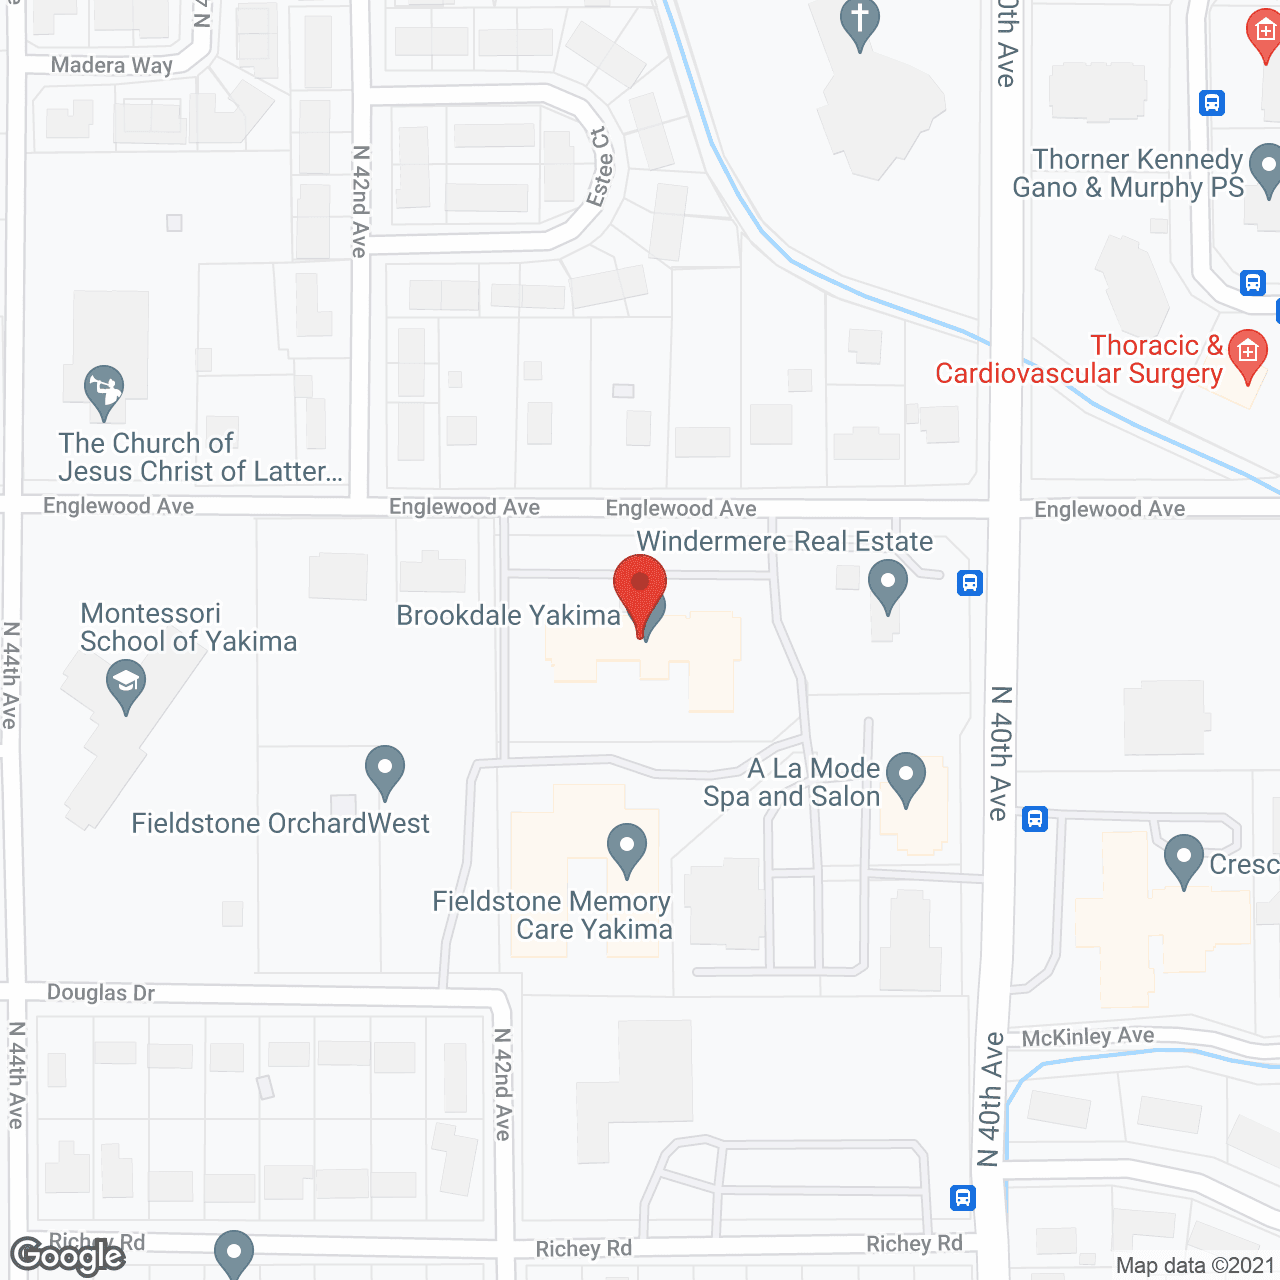 Brookdale Yakima in google map